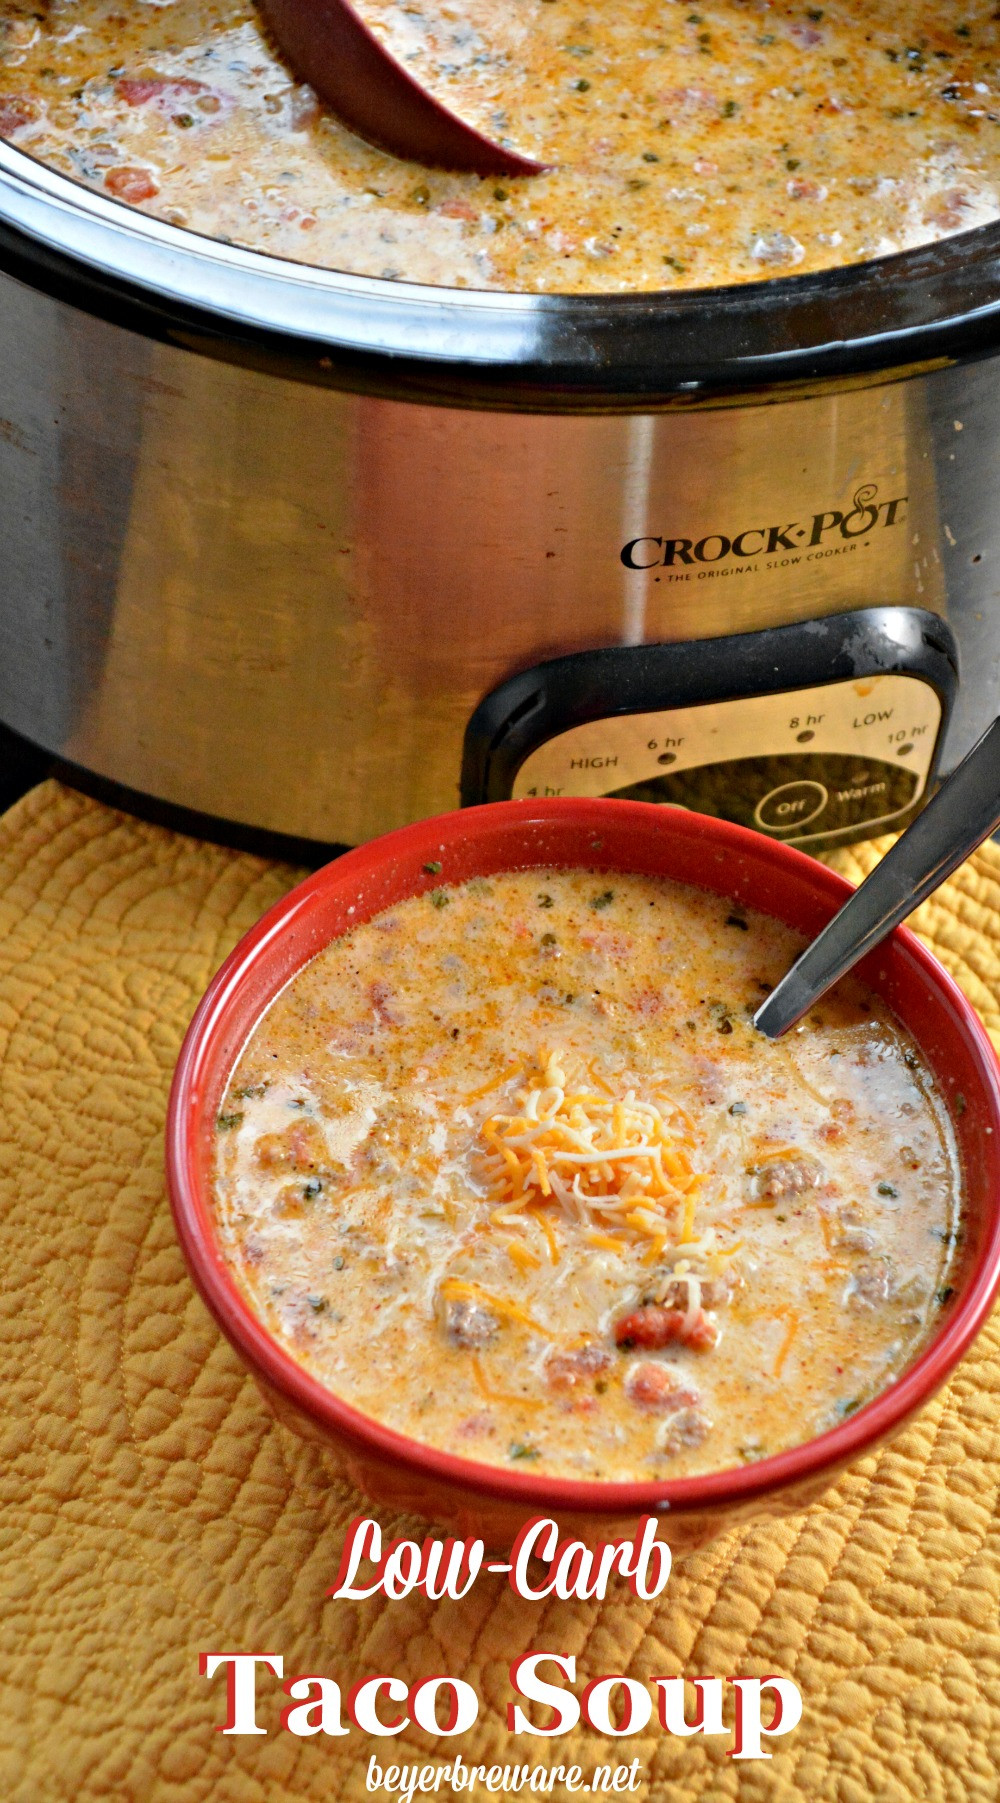 Crock Pot Keto Soup
 Crock Pot Low Carb Taco Soup Beyer Beware